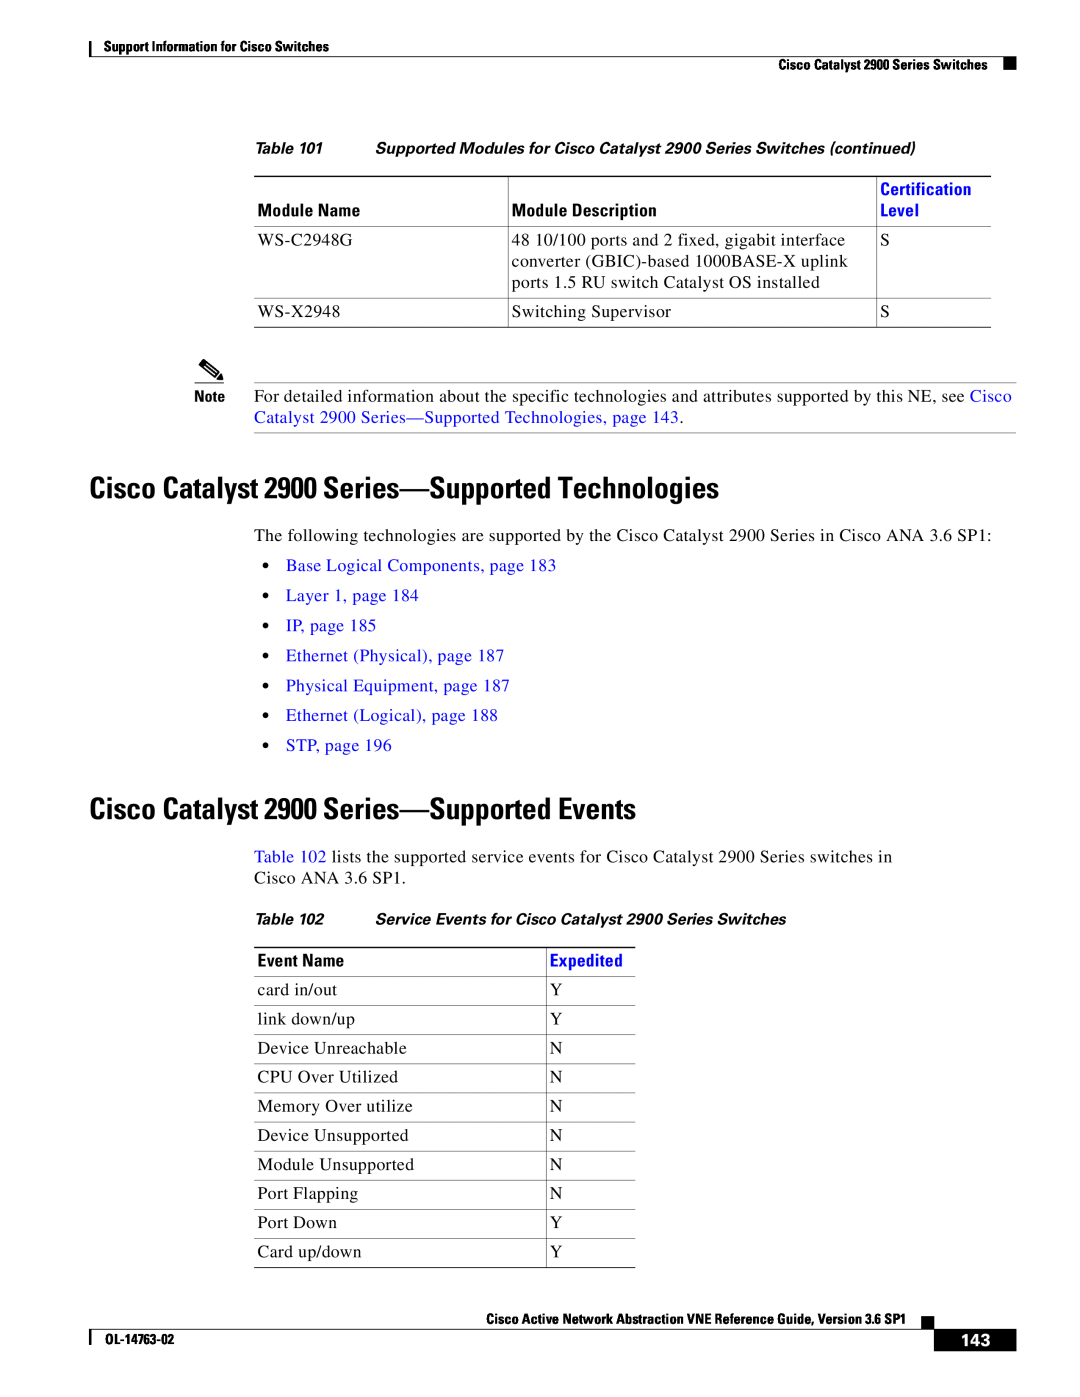 Cisco Systems OL-14763-02 Cisco Catalyst 2900 Series-Supported Technologies, Cisco Catalyst 2900 Series-Supported Events 